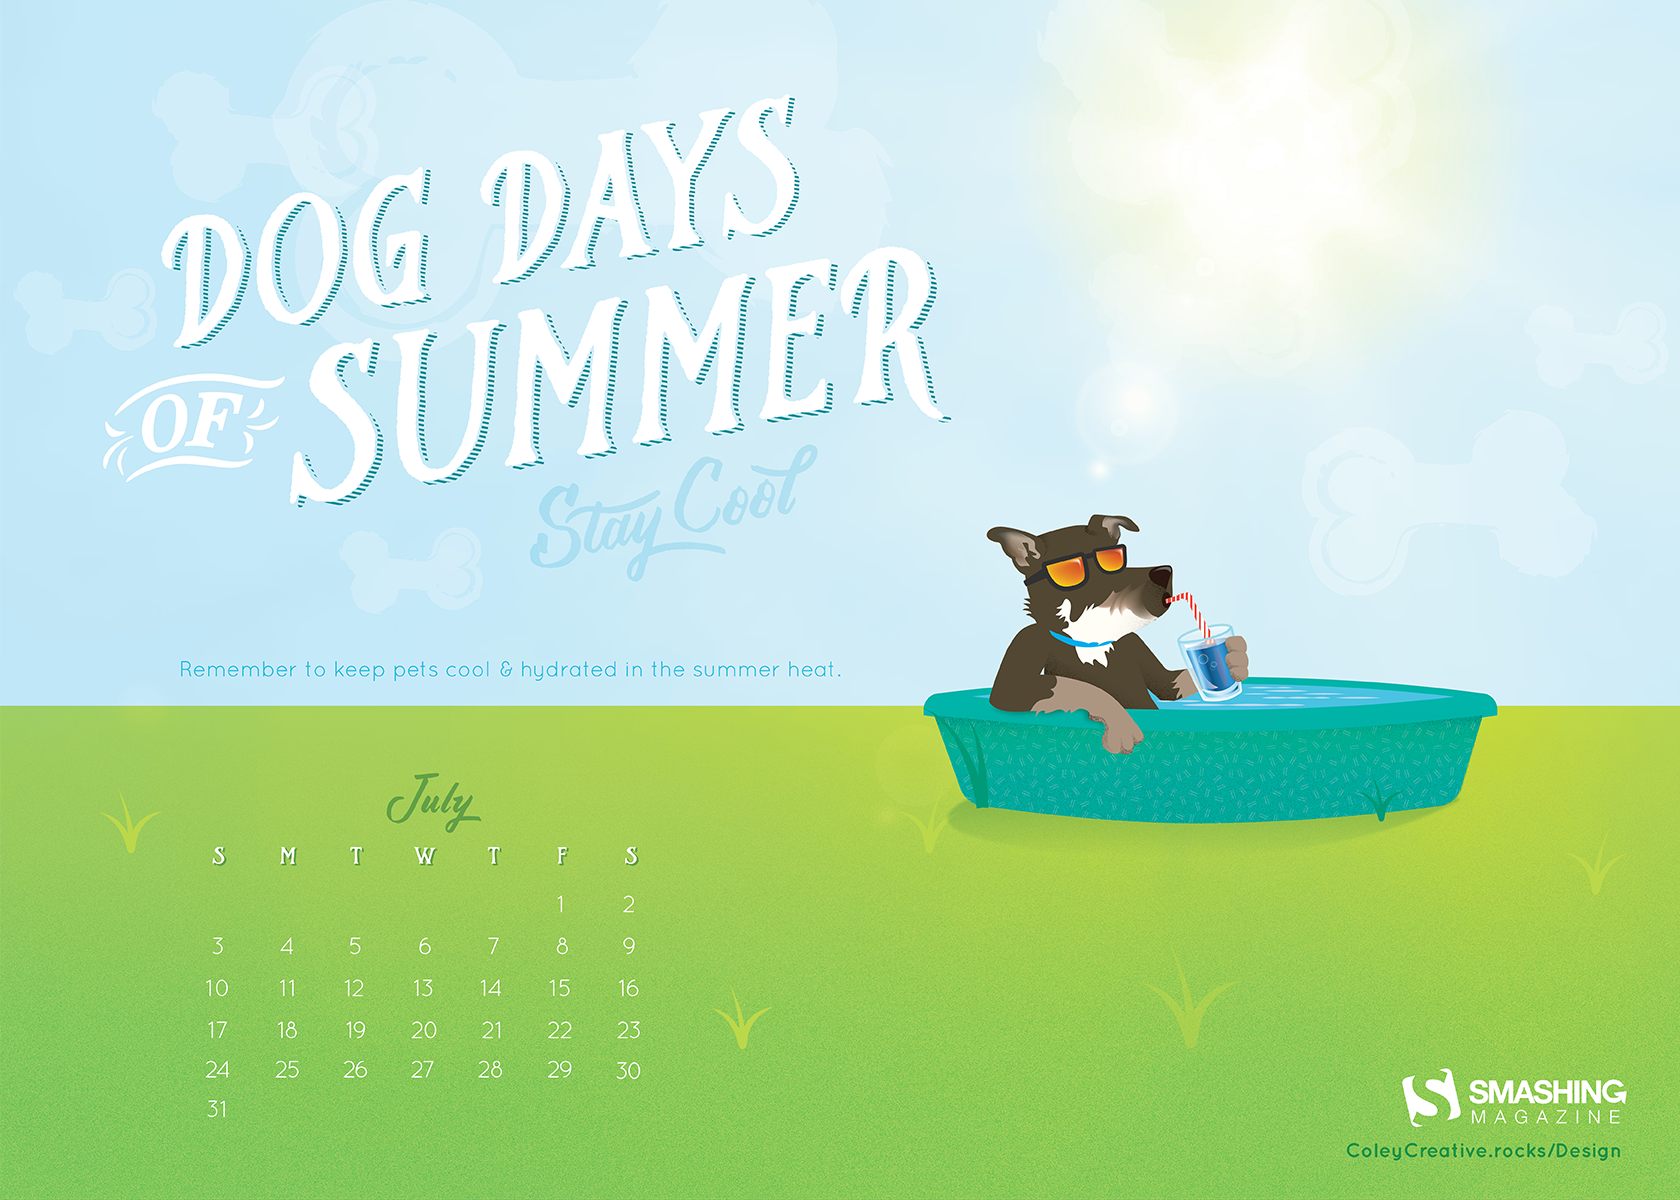 Keep pets перевод. Dog Days of Summer. Dog Days of Summer идиома. Дог дей обои. Обои календарь июль.